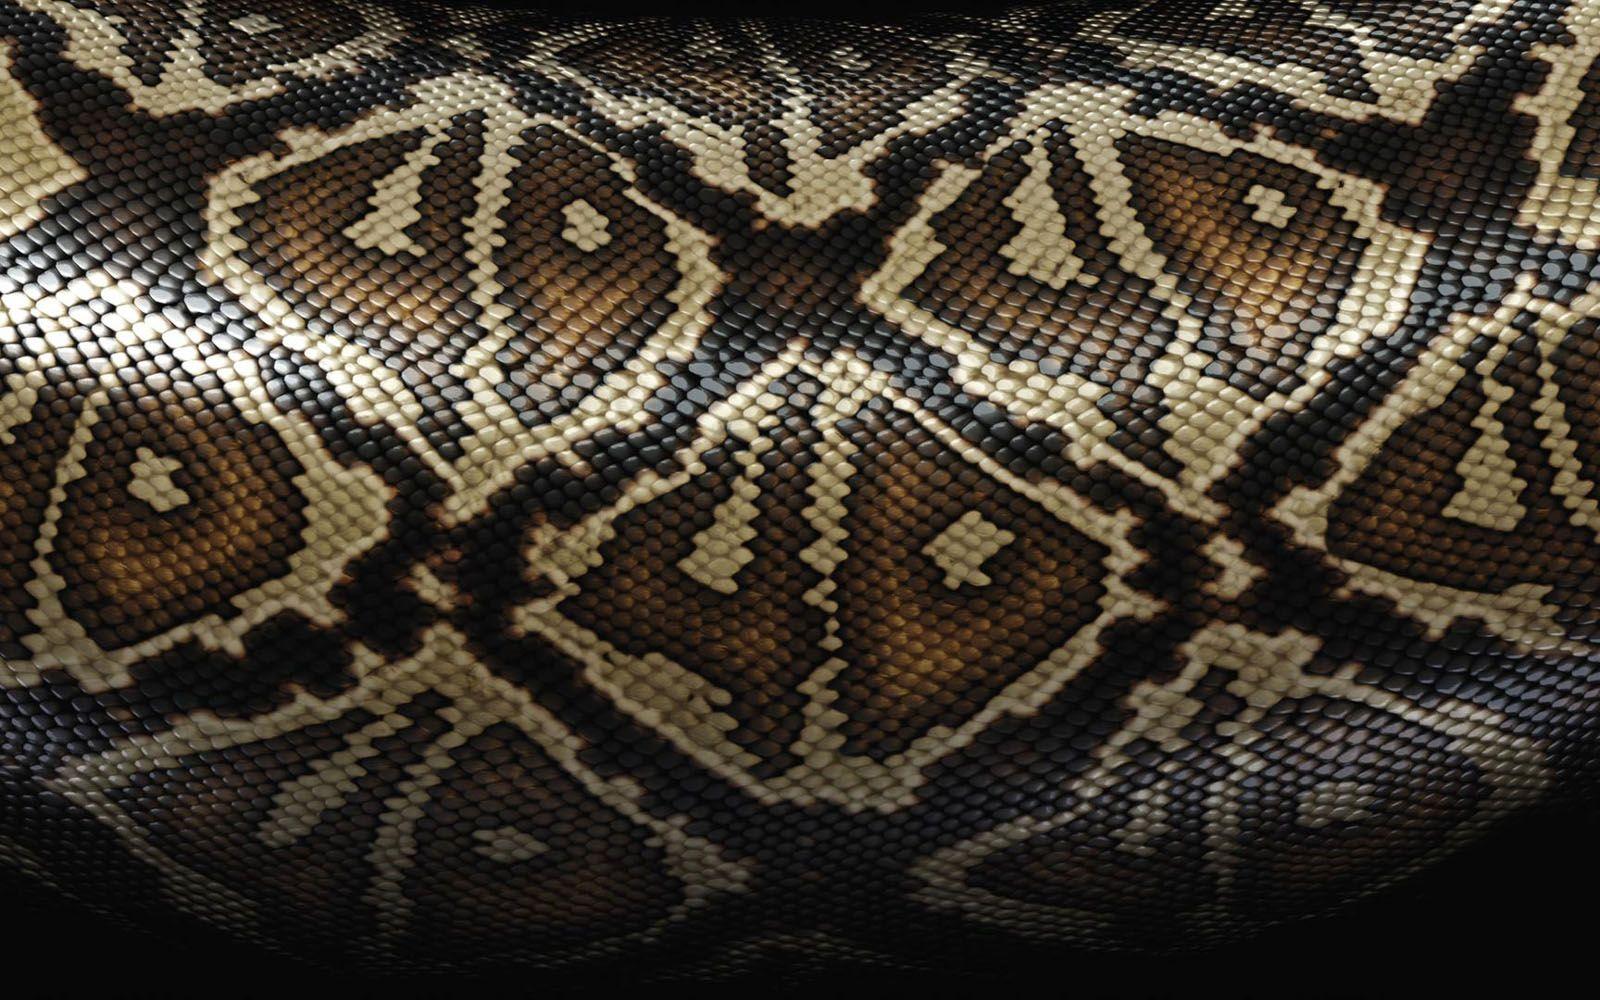 1600 Snake Skin Background Illustrations RoyaltyFree Vector Graphics   Clip Art  iStock  Snake skin texture